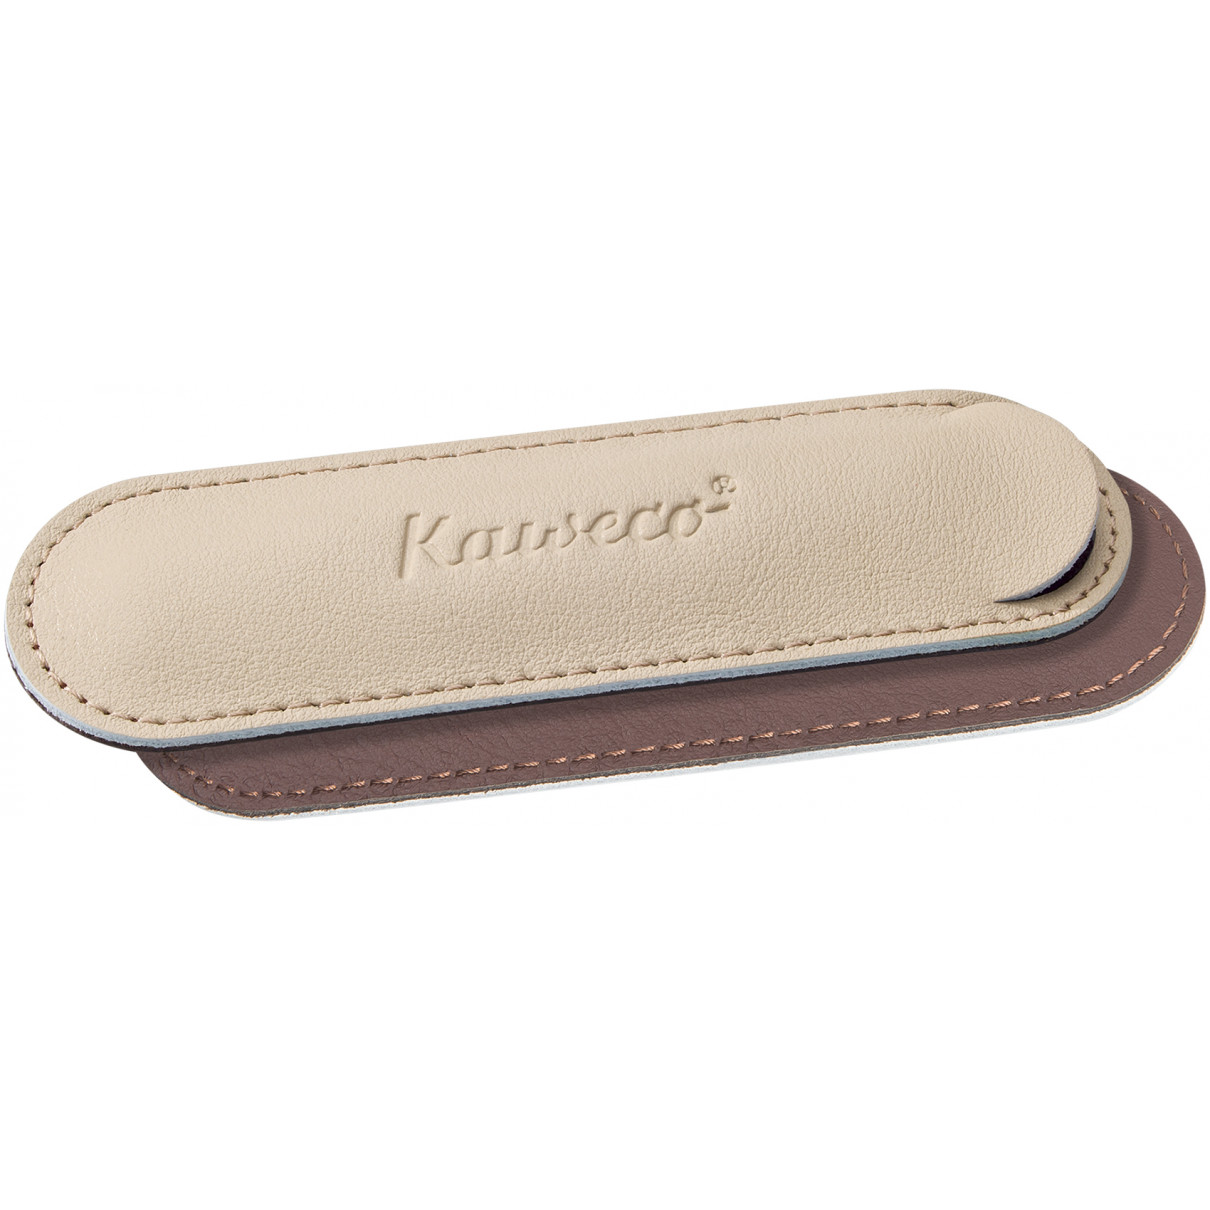 Kaweco Eco Leather Pouch for Sport Pens - Creamy Espresso - Single